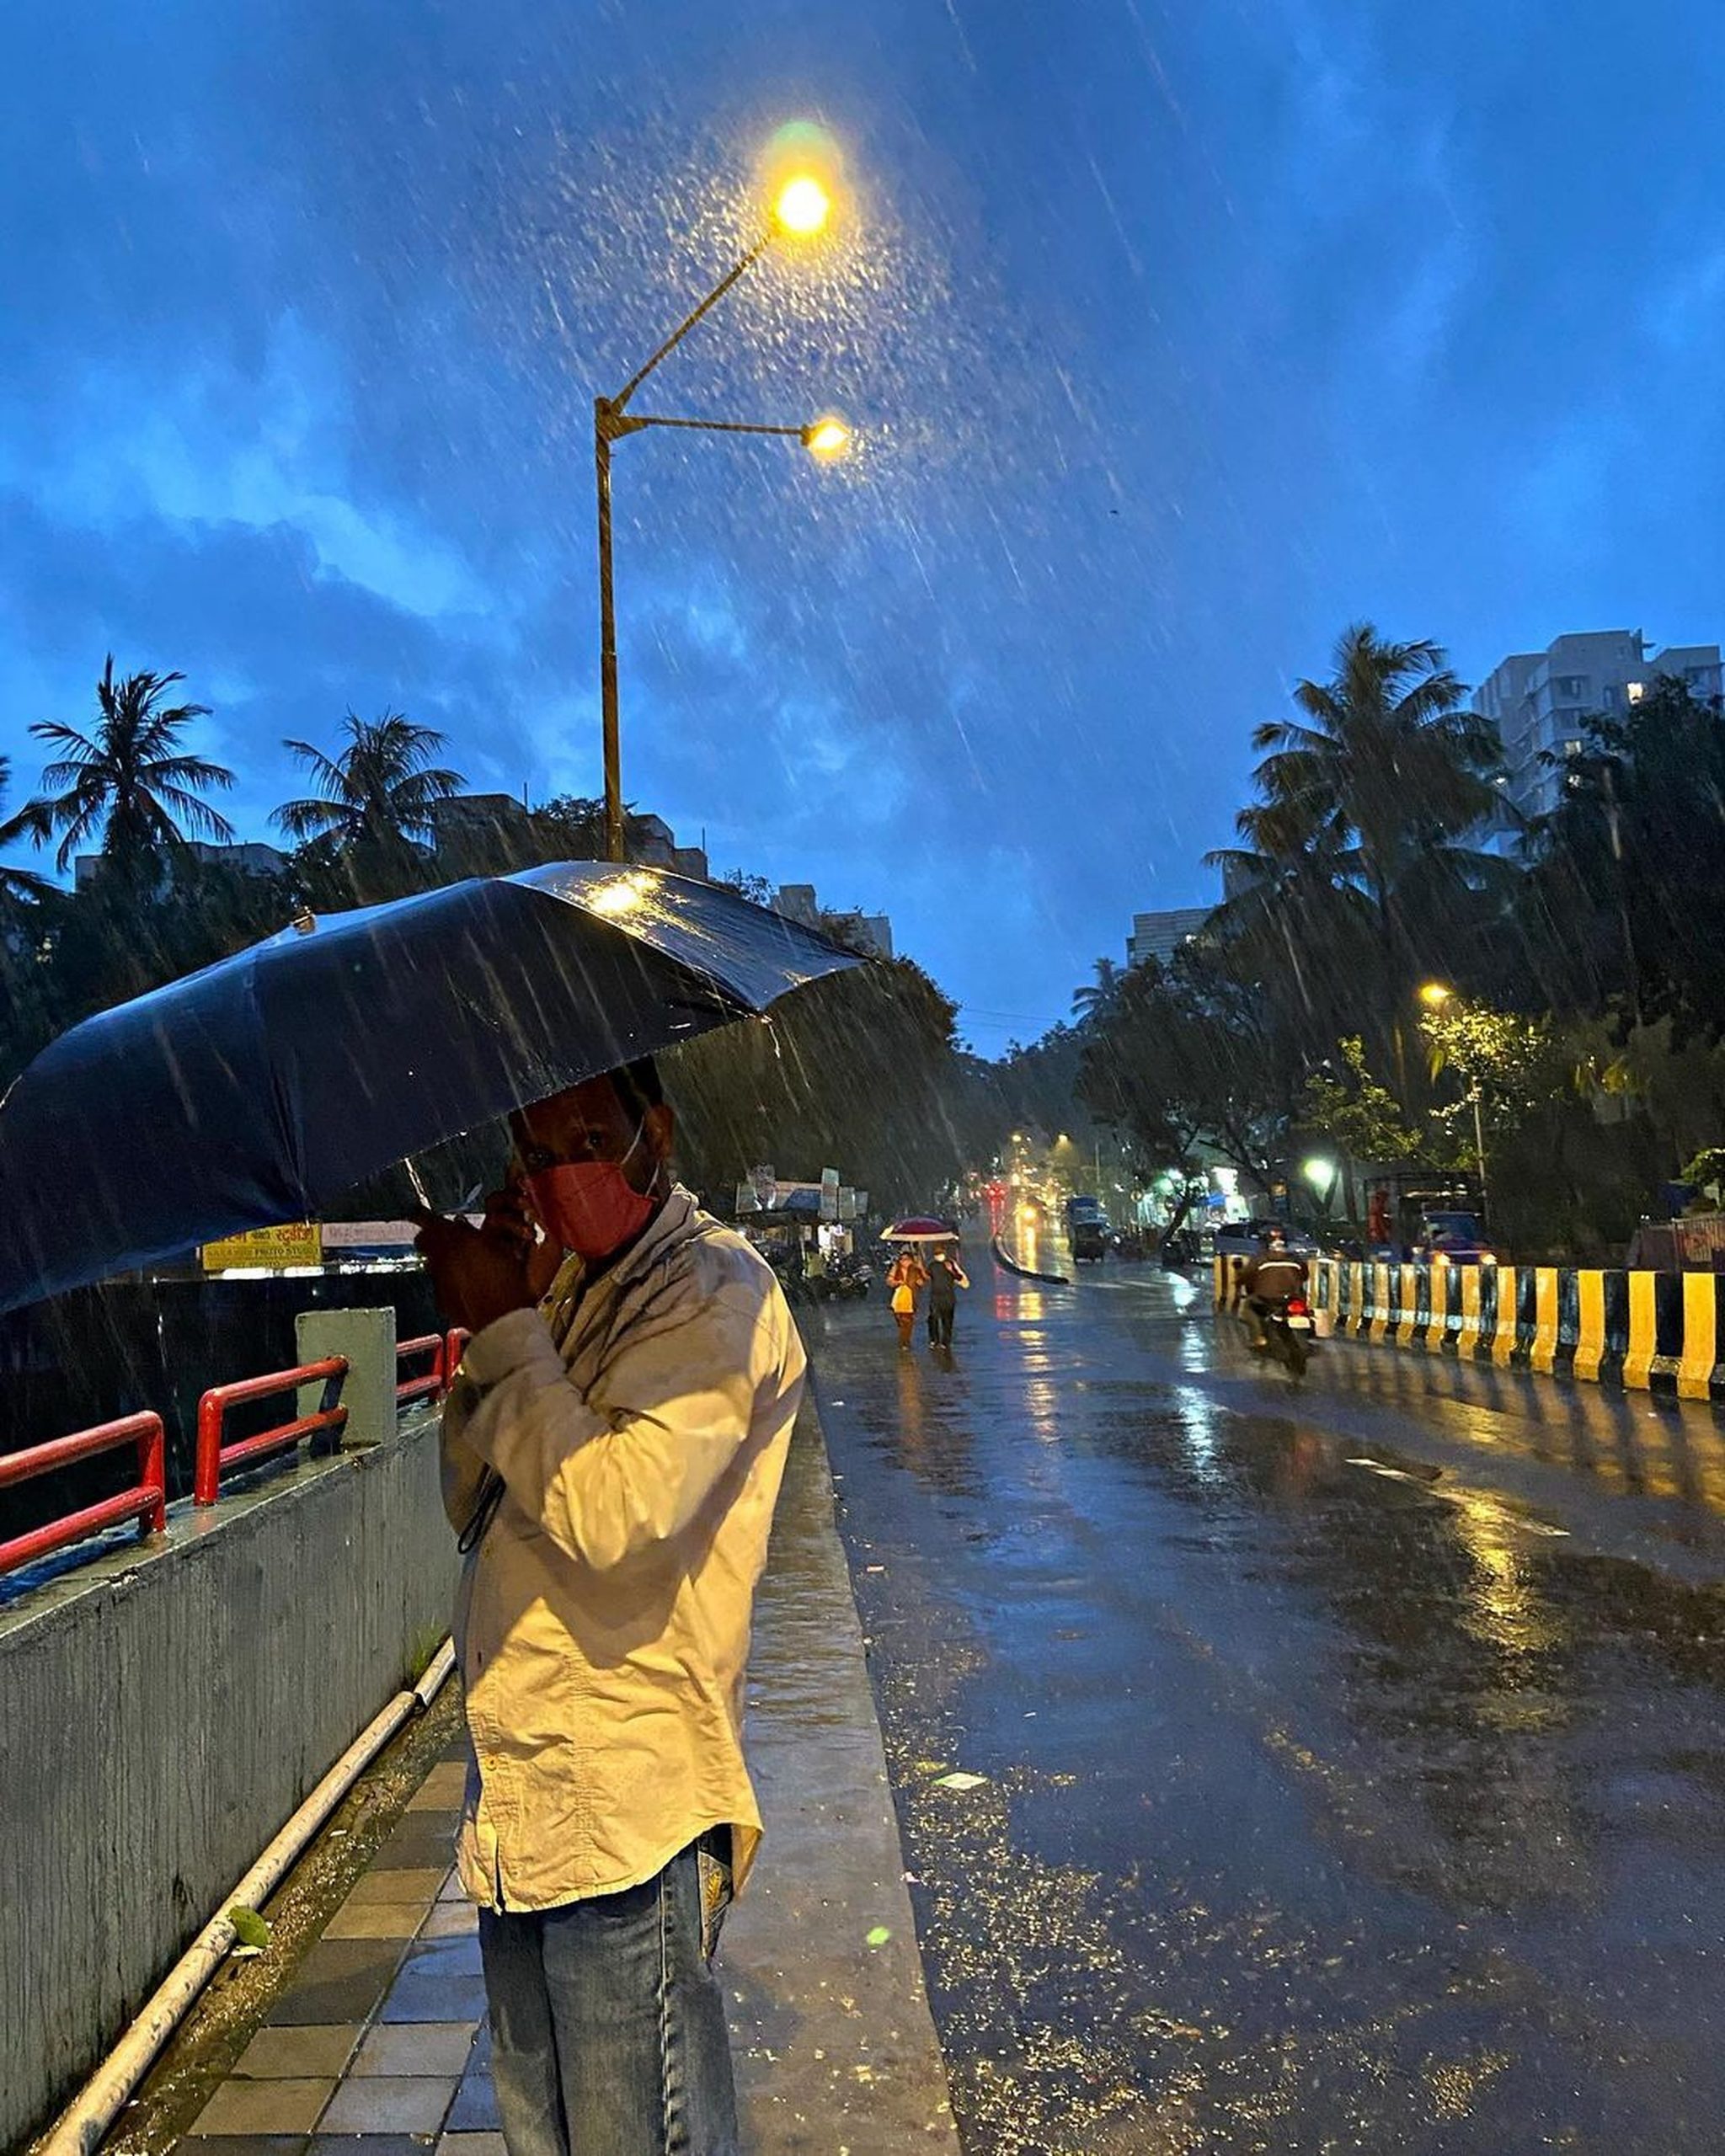 A man with umbrella in rain